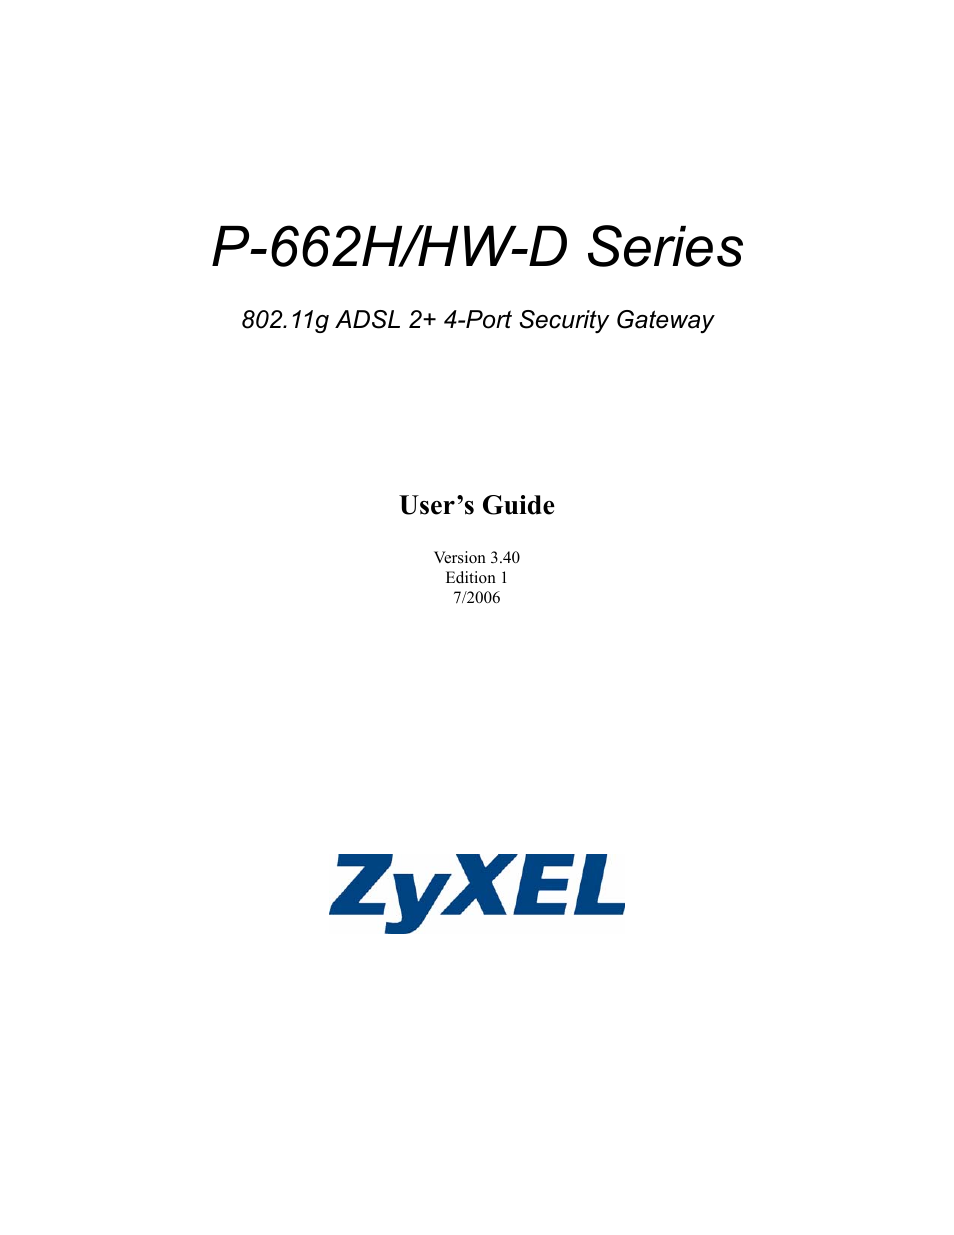 802.11g ADSL 2+ 4-Port Security Gateway HW-D Series